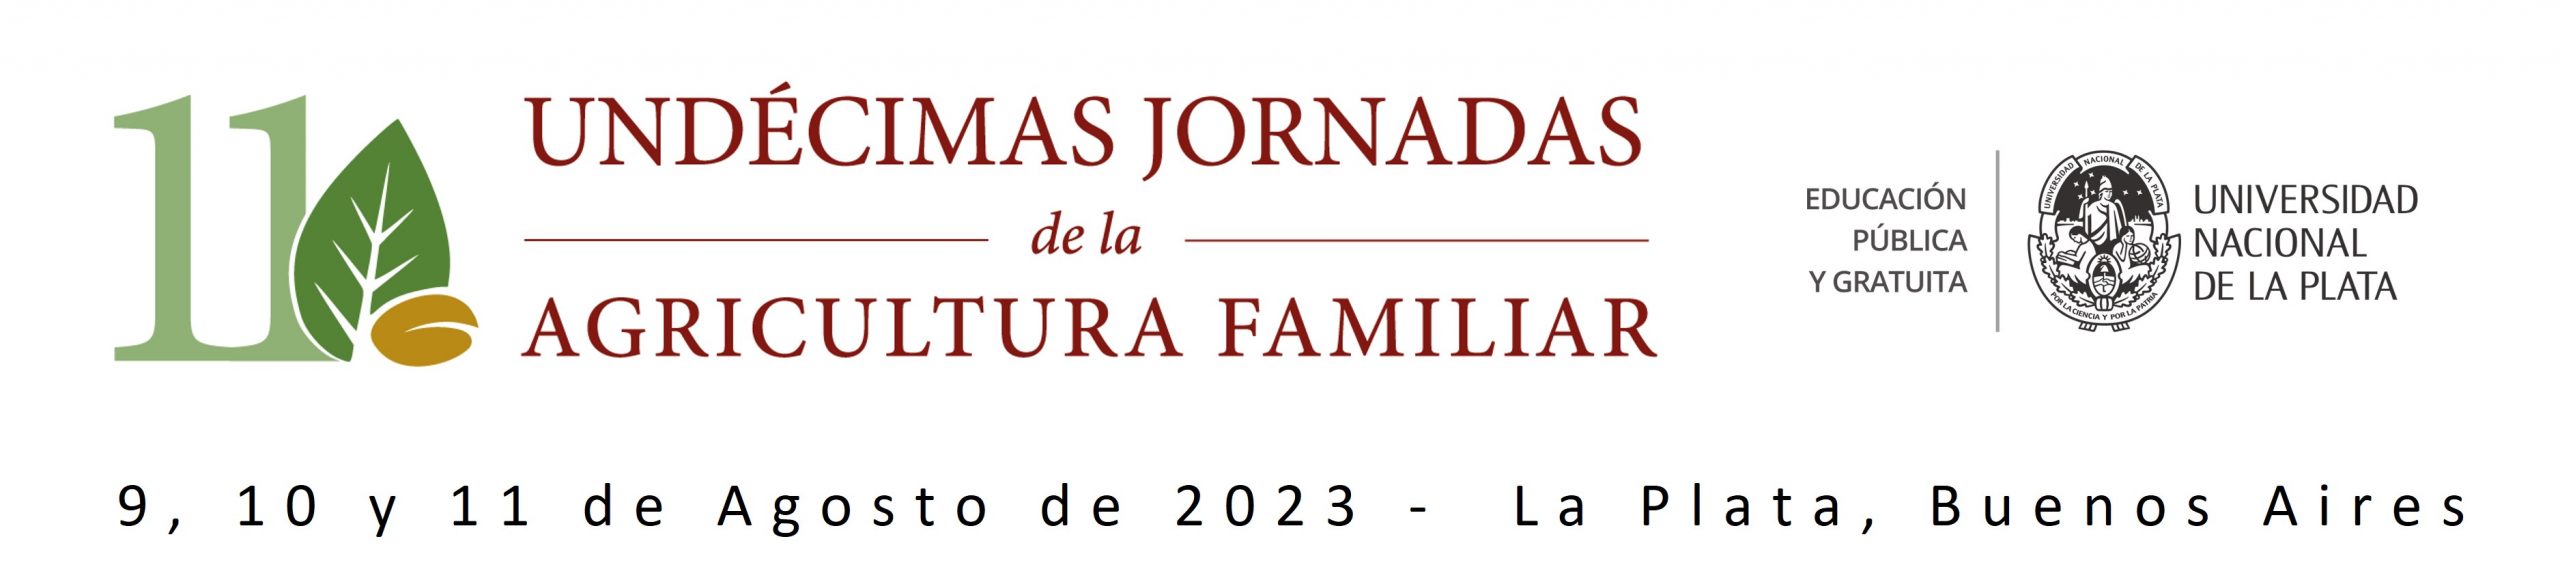 11mas Jornadas de la Agricultura Familiar Logo